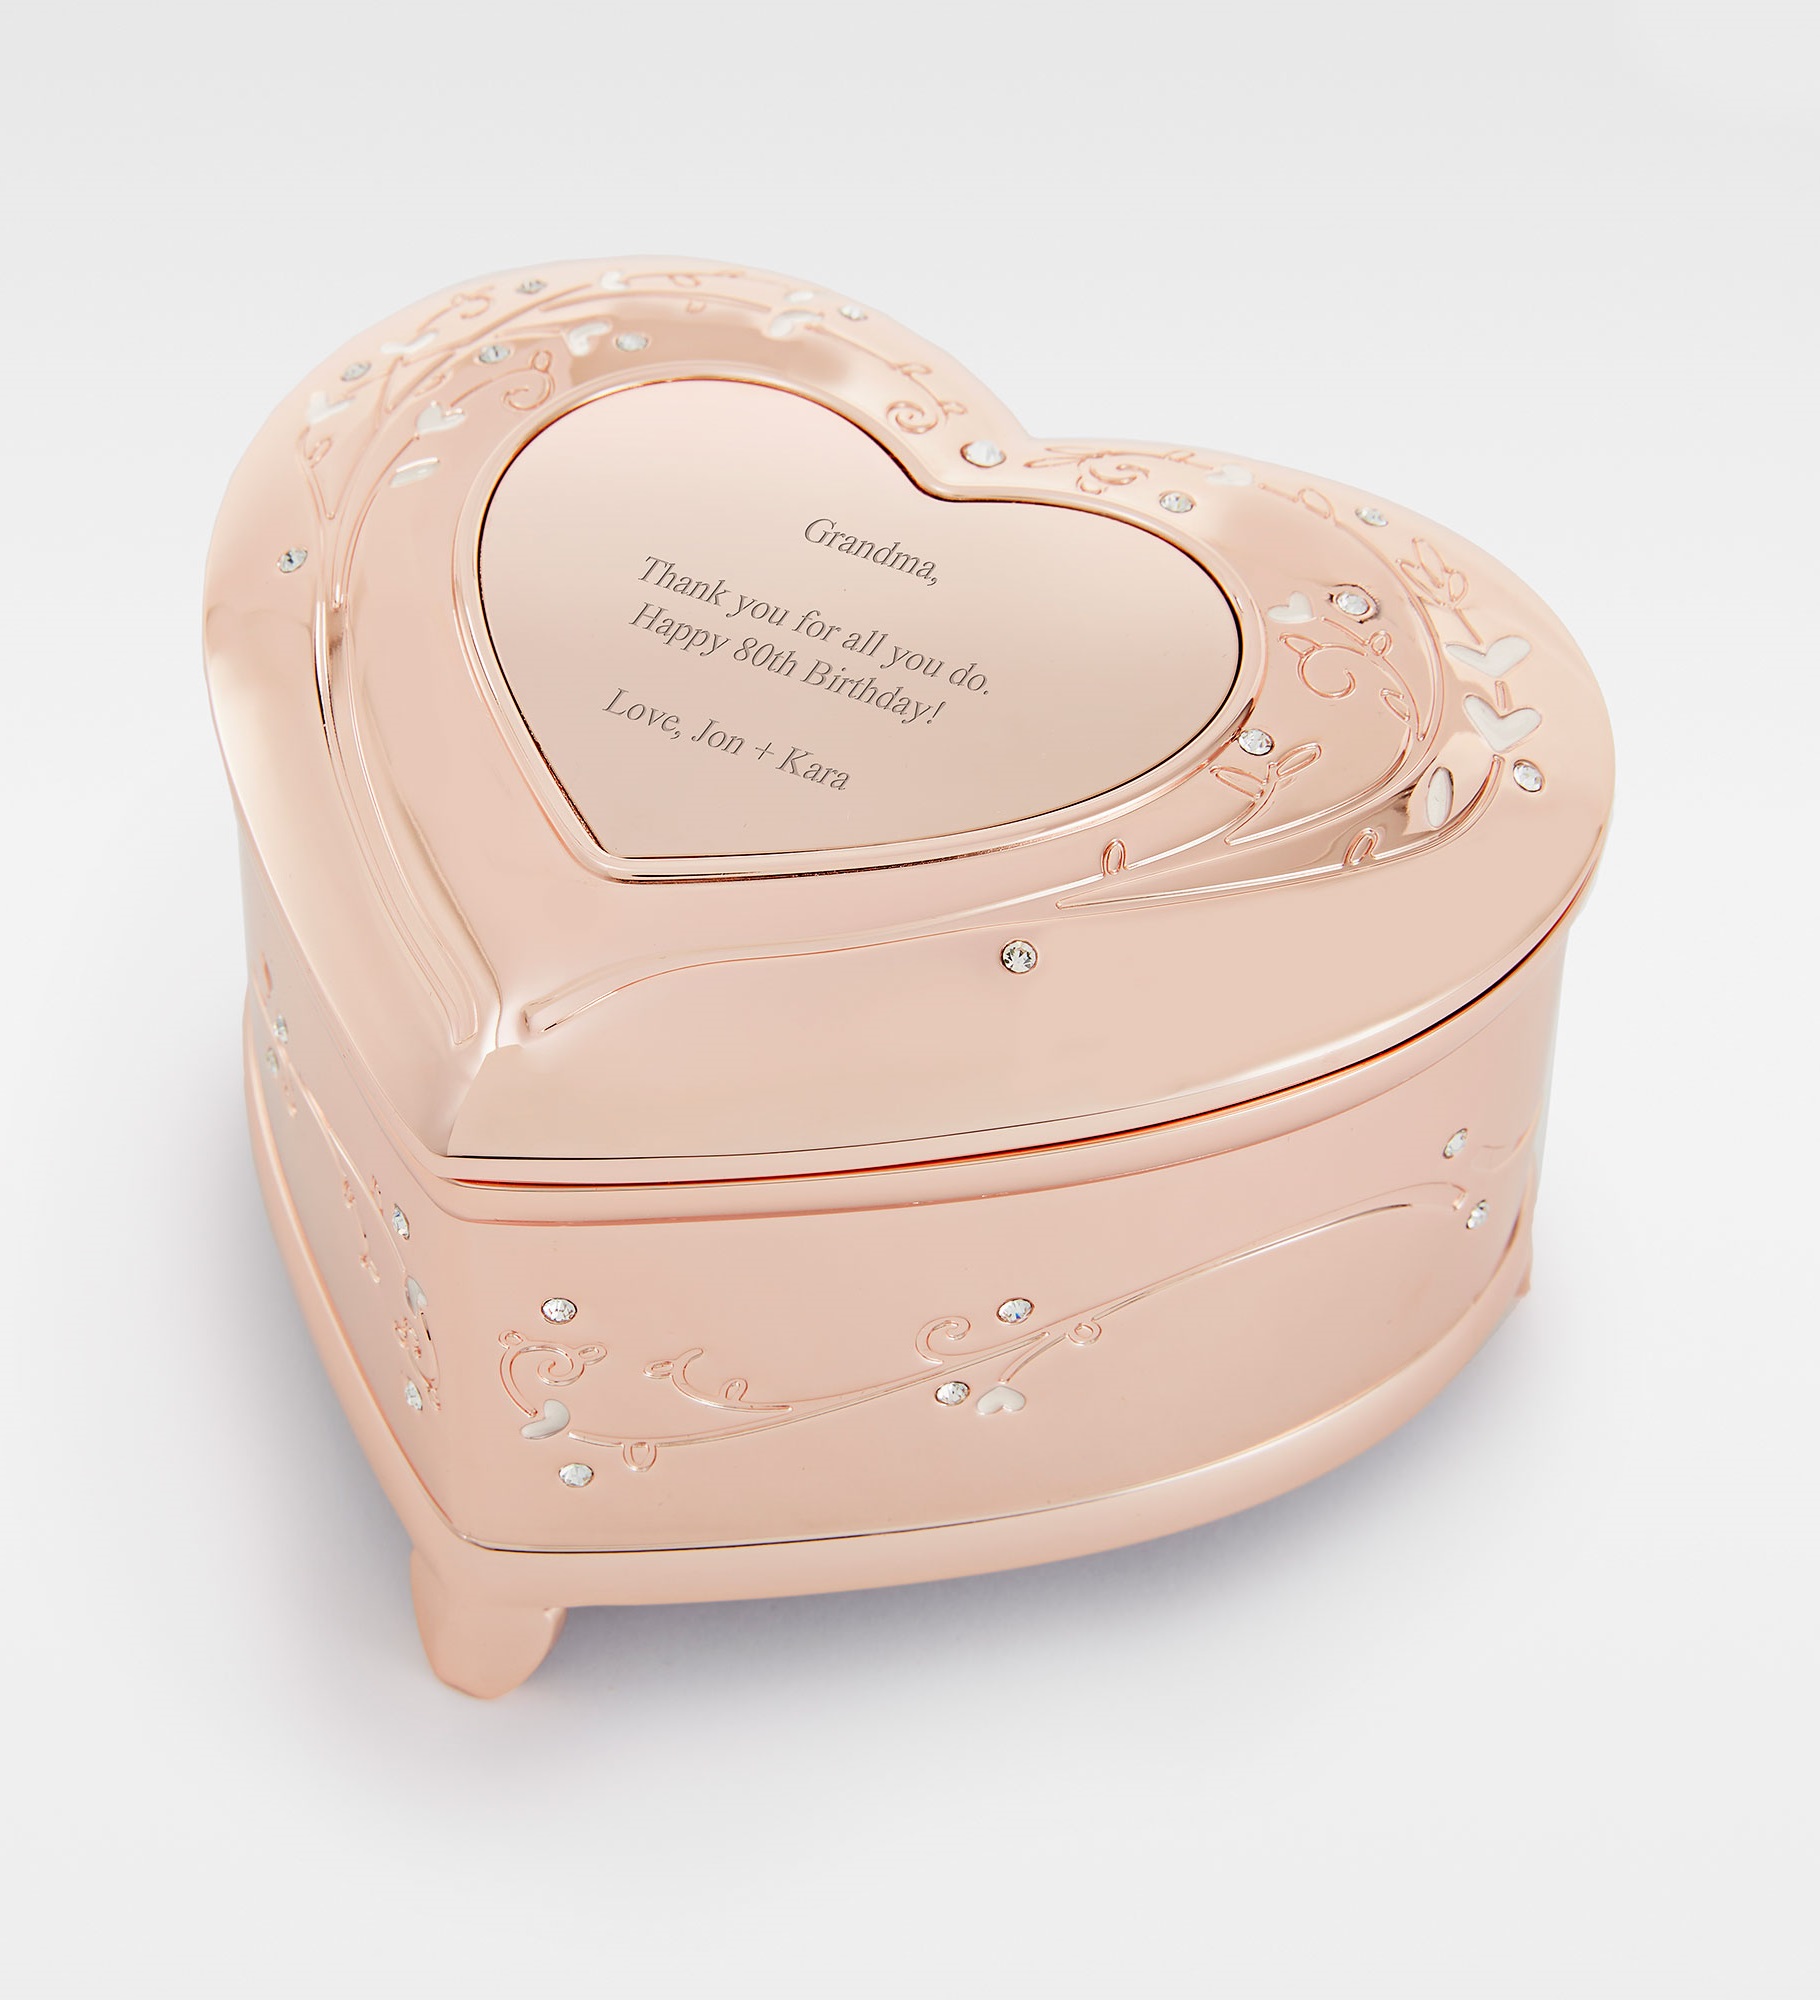 Engraved Rose Gold Heart & Vines Musical Box